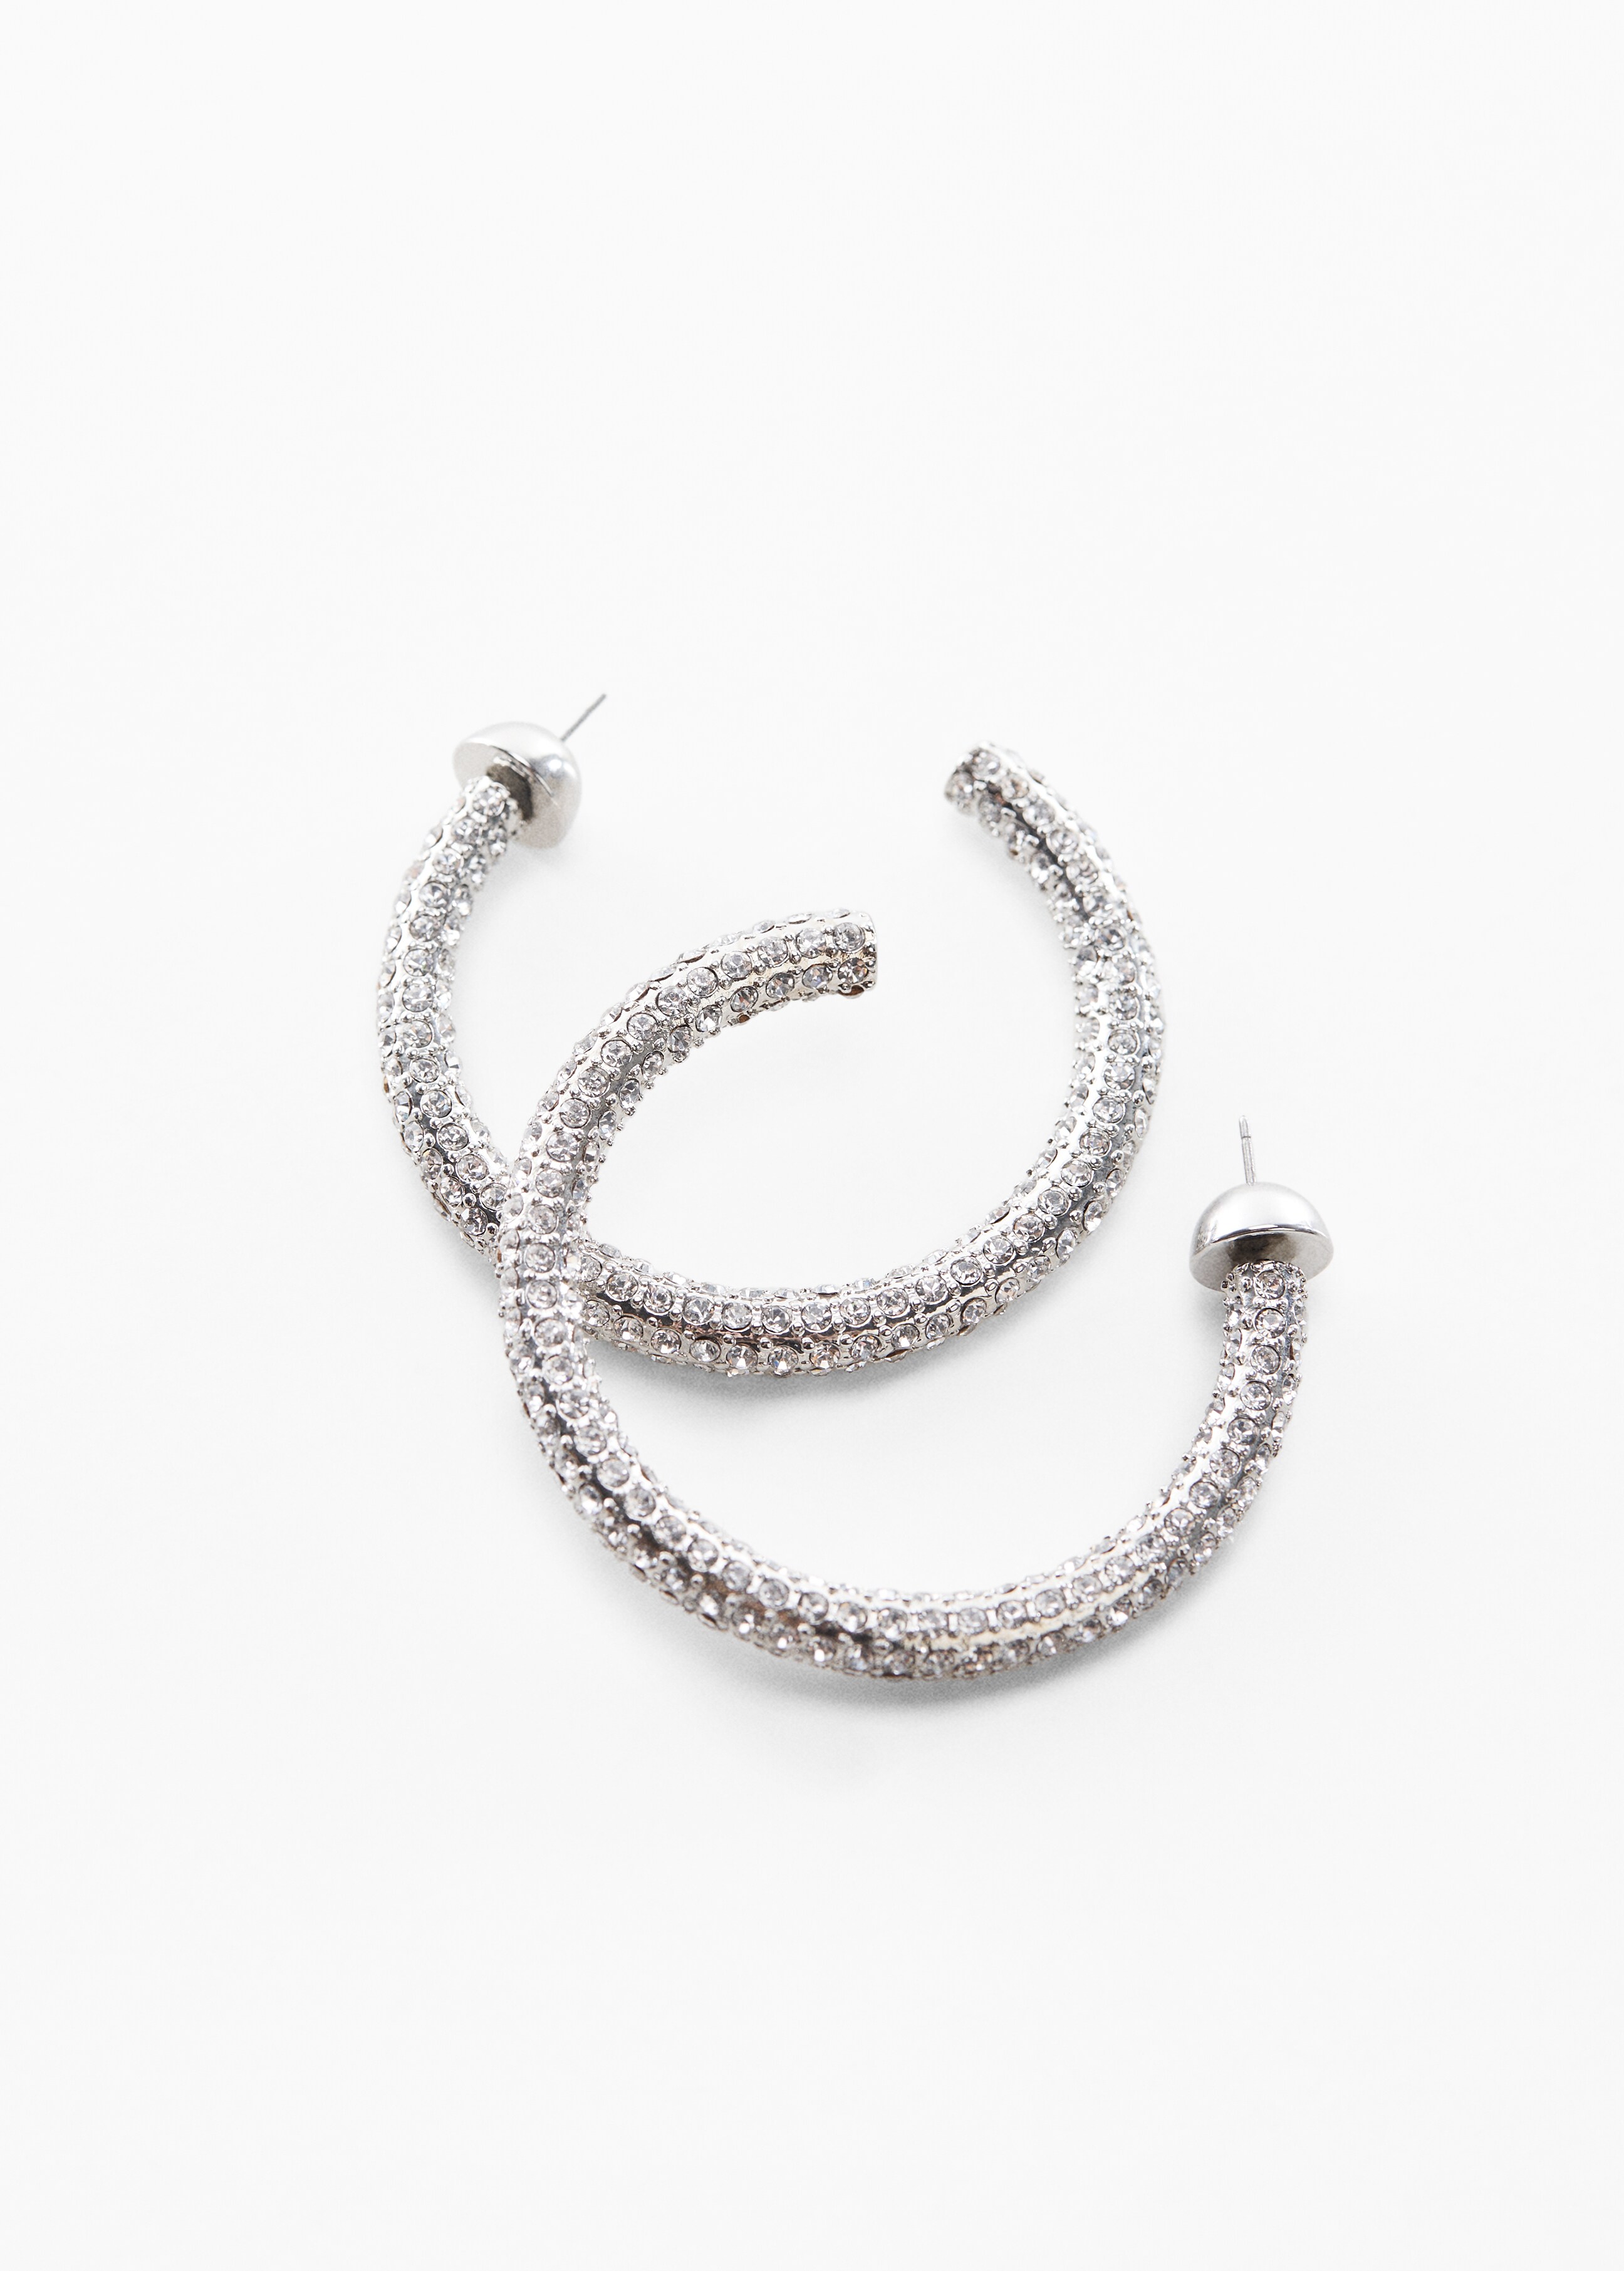 Faceted crystal hoop earrings - Details of the article 1